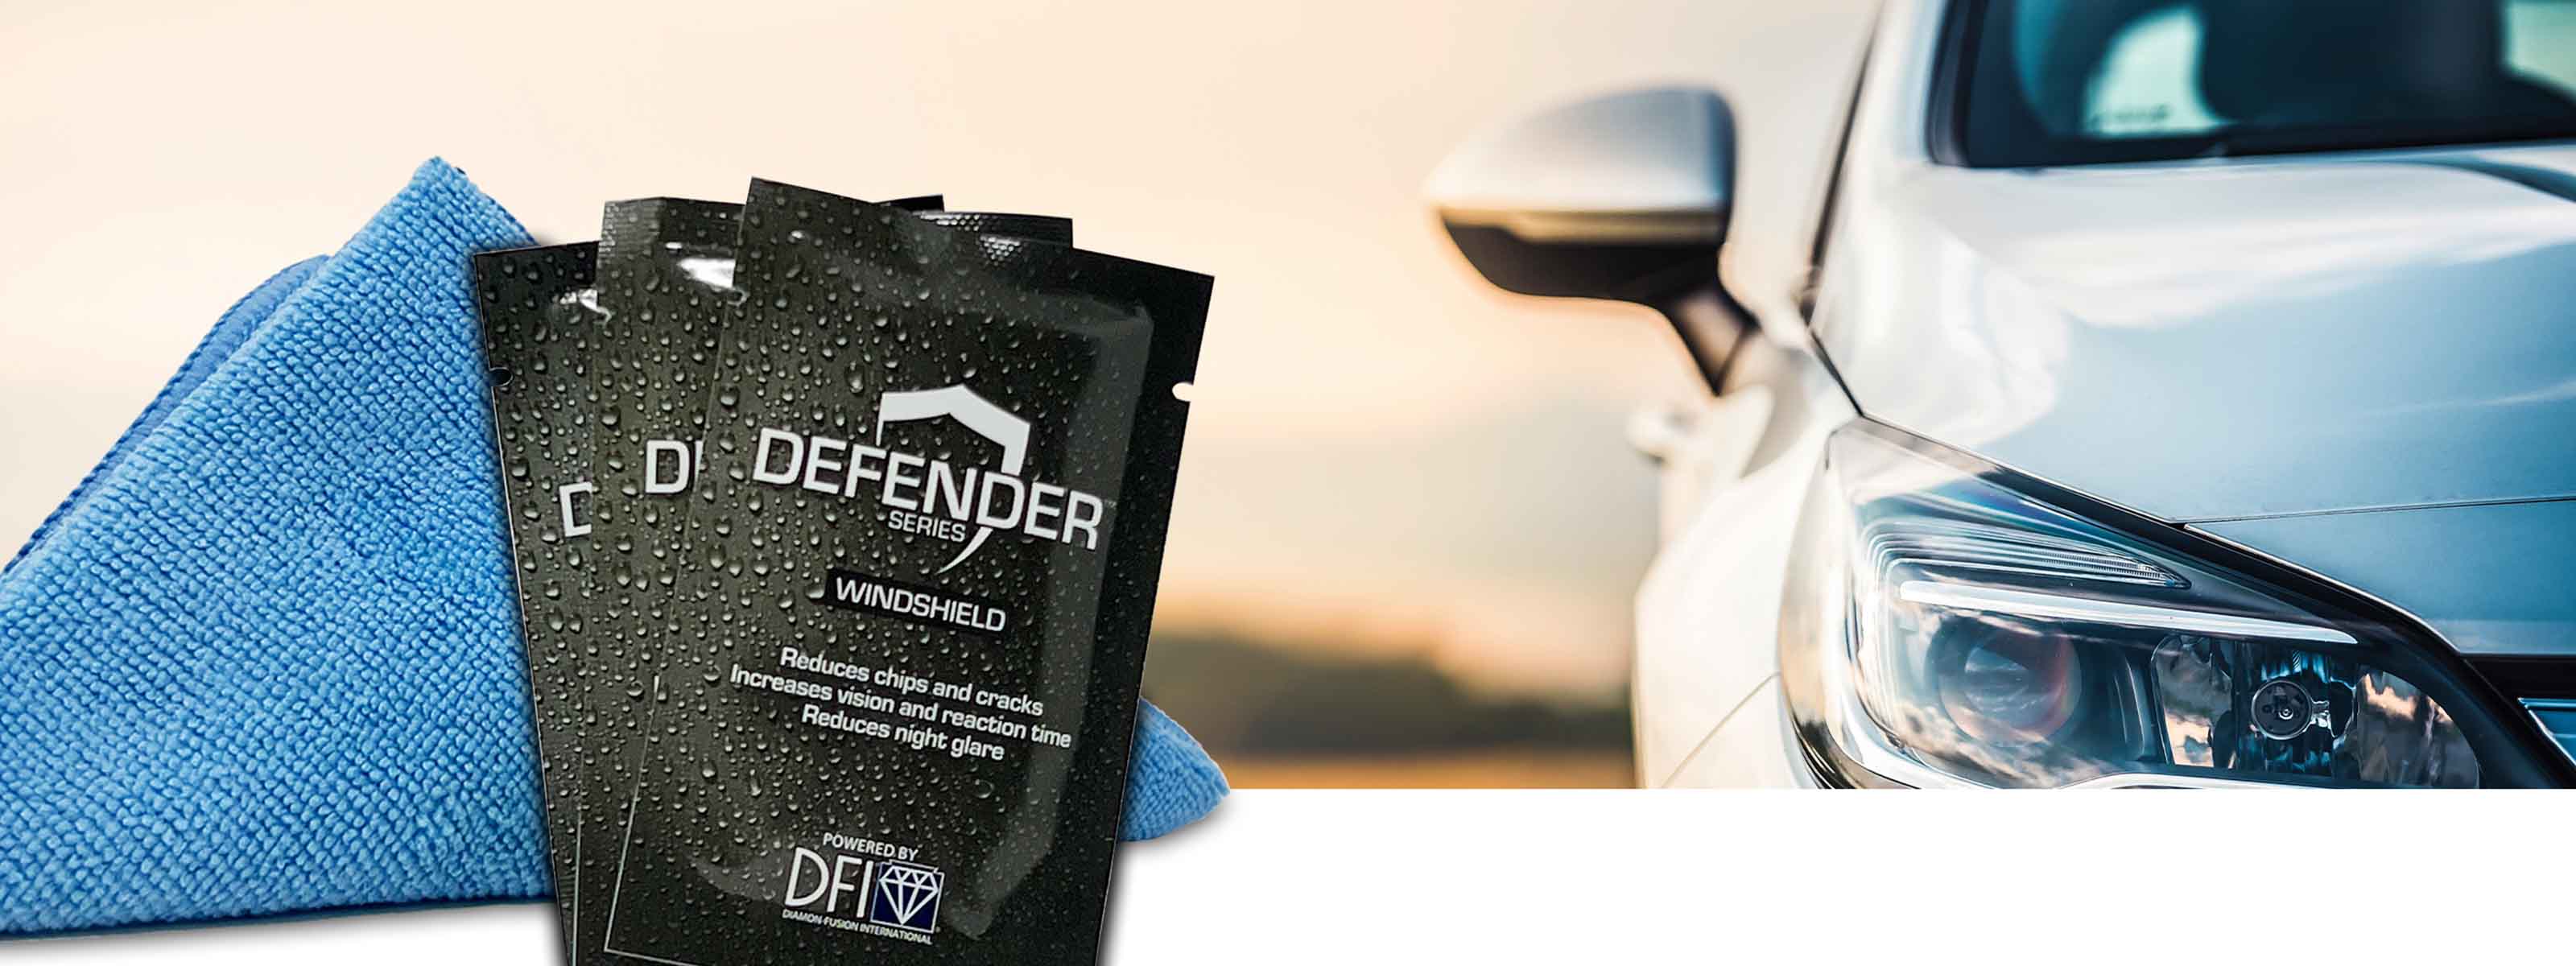 Windshield Defender NanoPax with Blue Microfiber Towel on Background